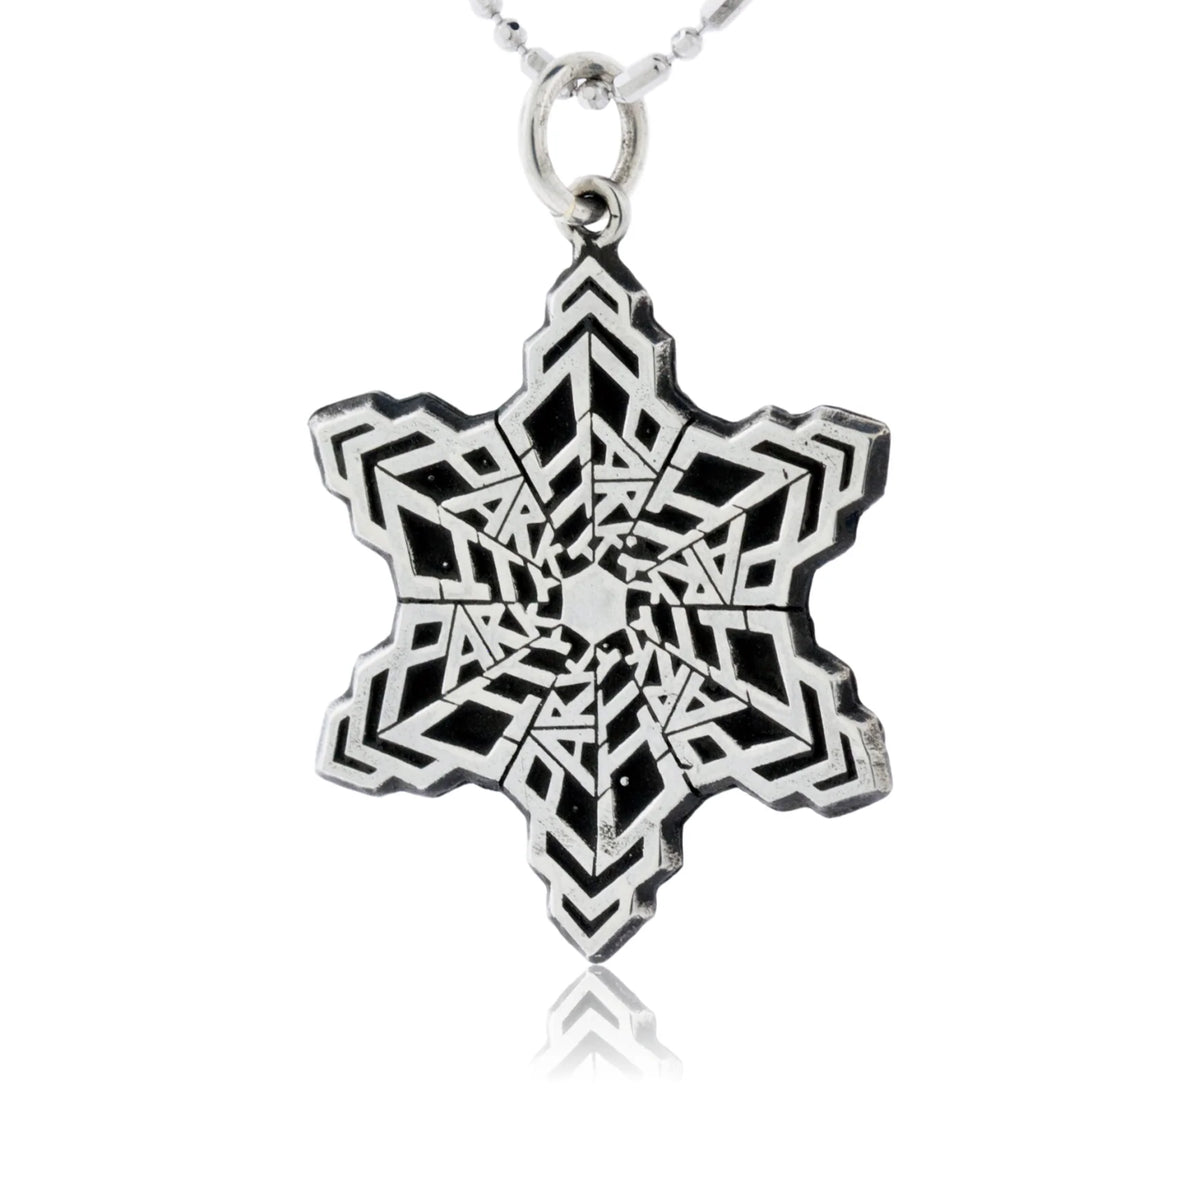 Original Park City Jewelers snowflake pendant